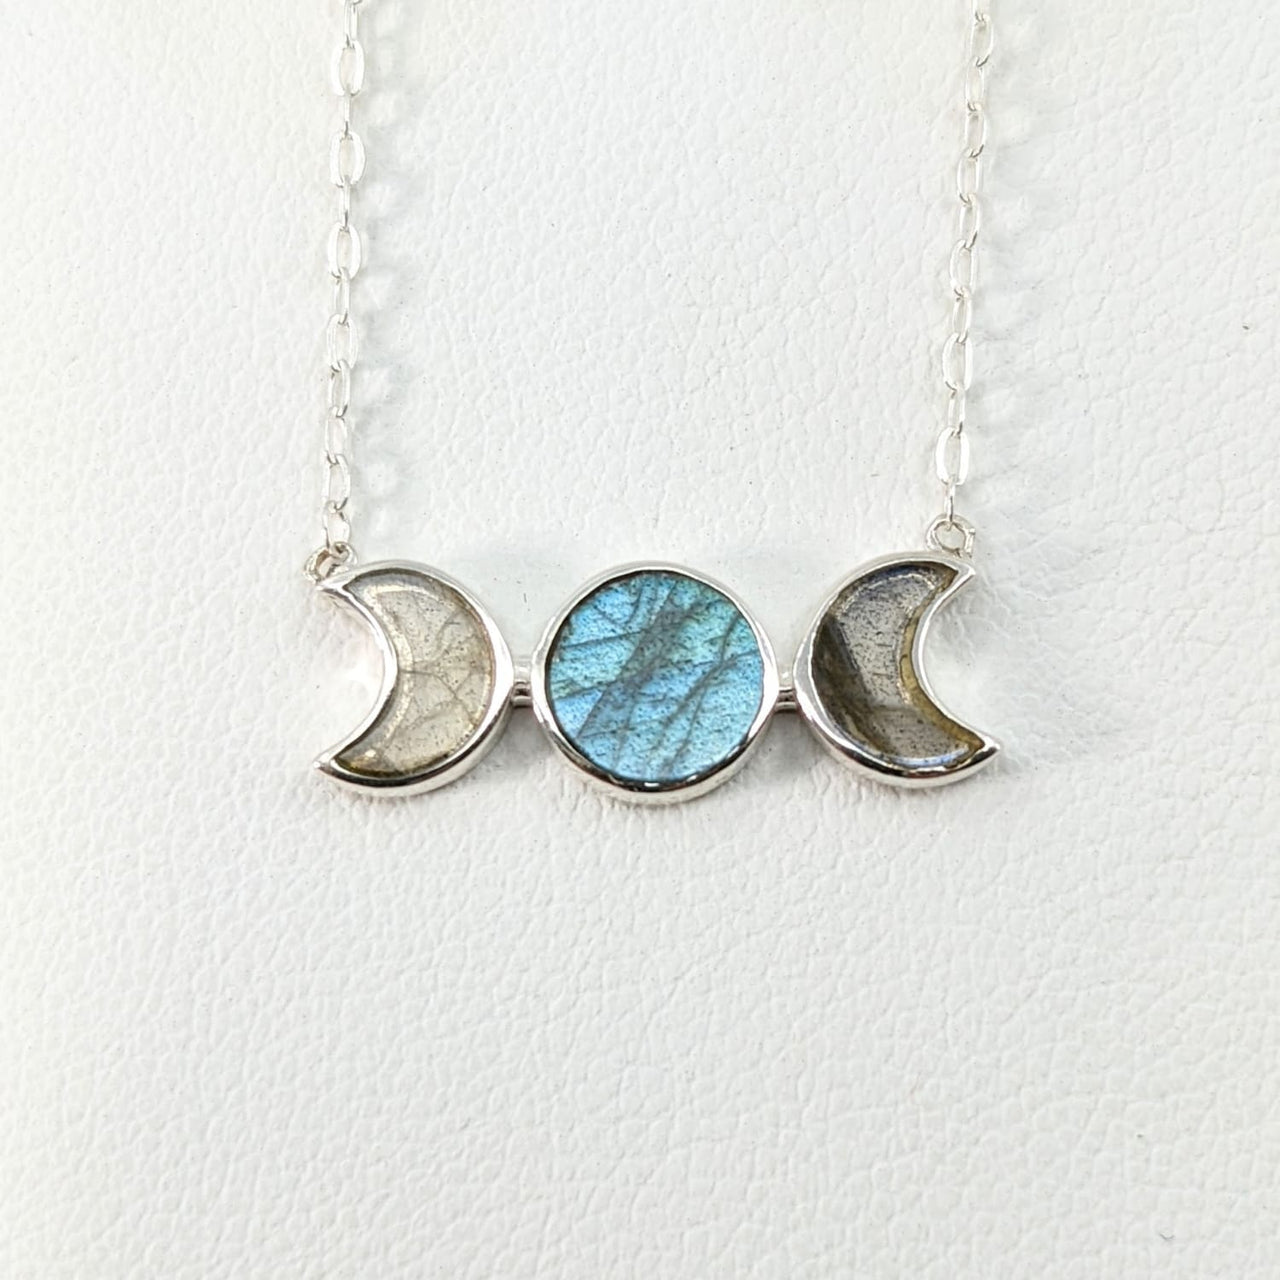 Labradorite Triple Moon SS Necklace (1.8g) #SK9083 - $62